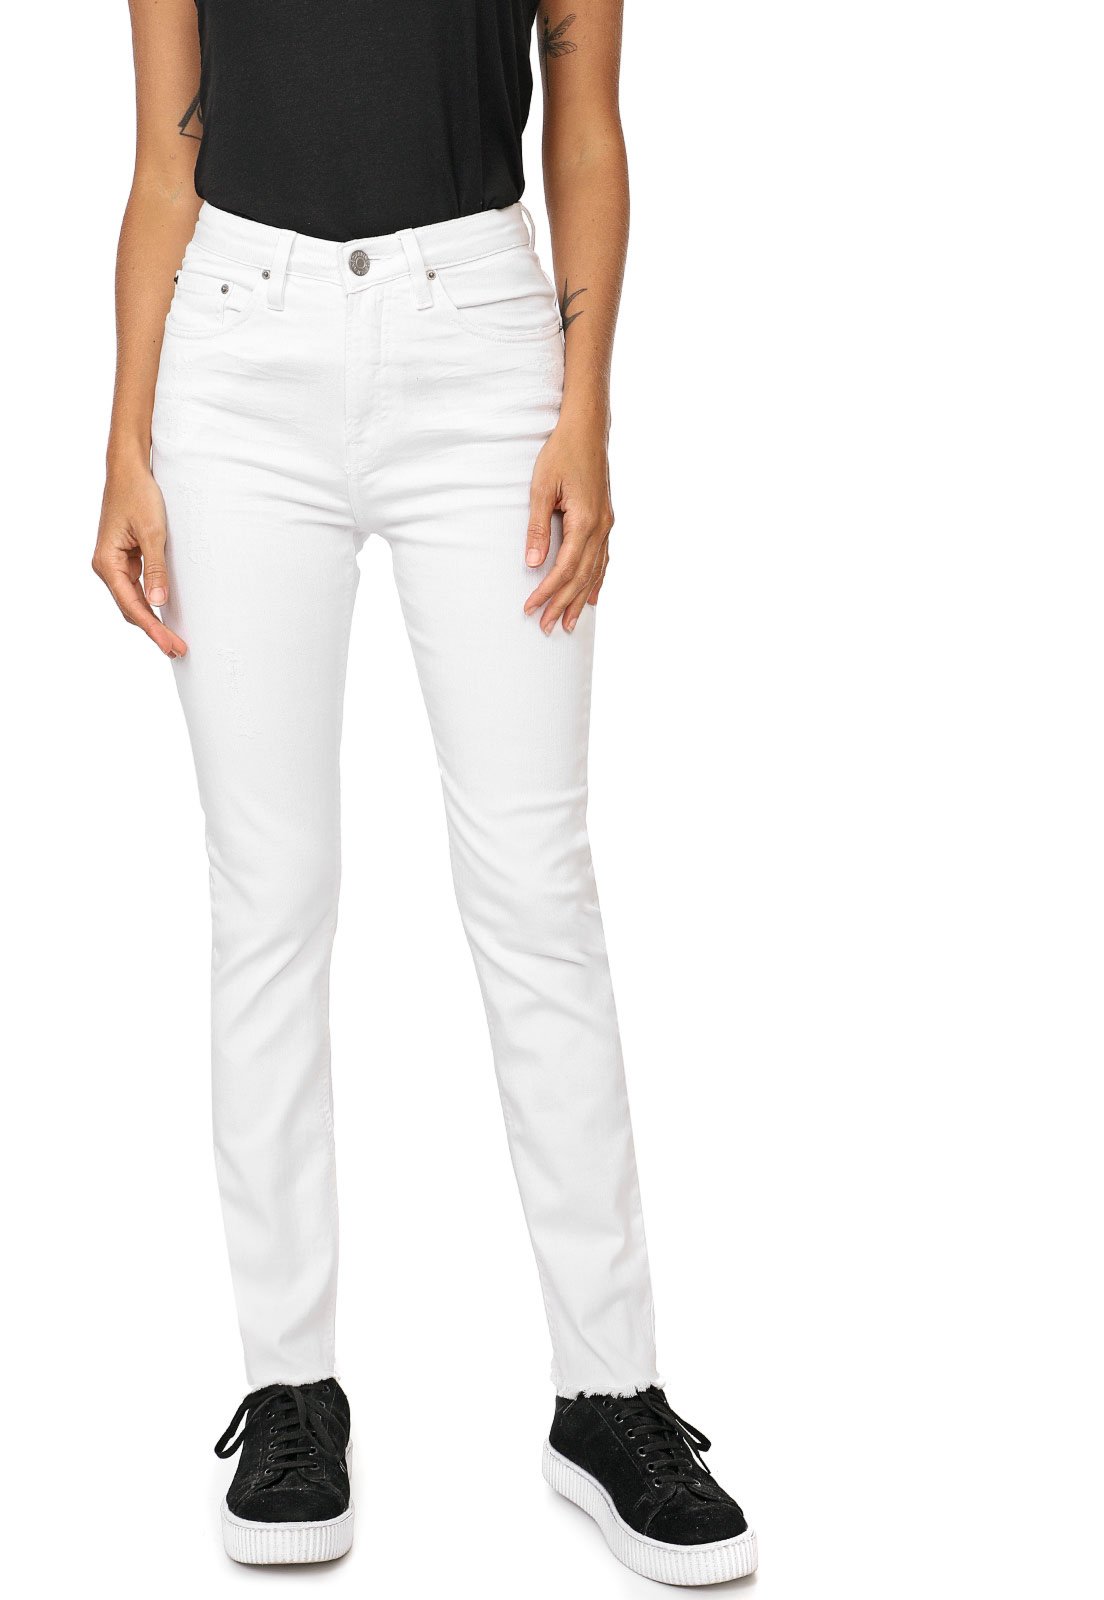 Calça Sarja Calvin Klein Jeans Slim Color Branca - Compre Agora